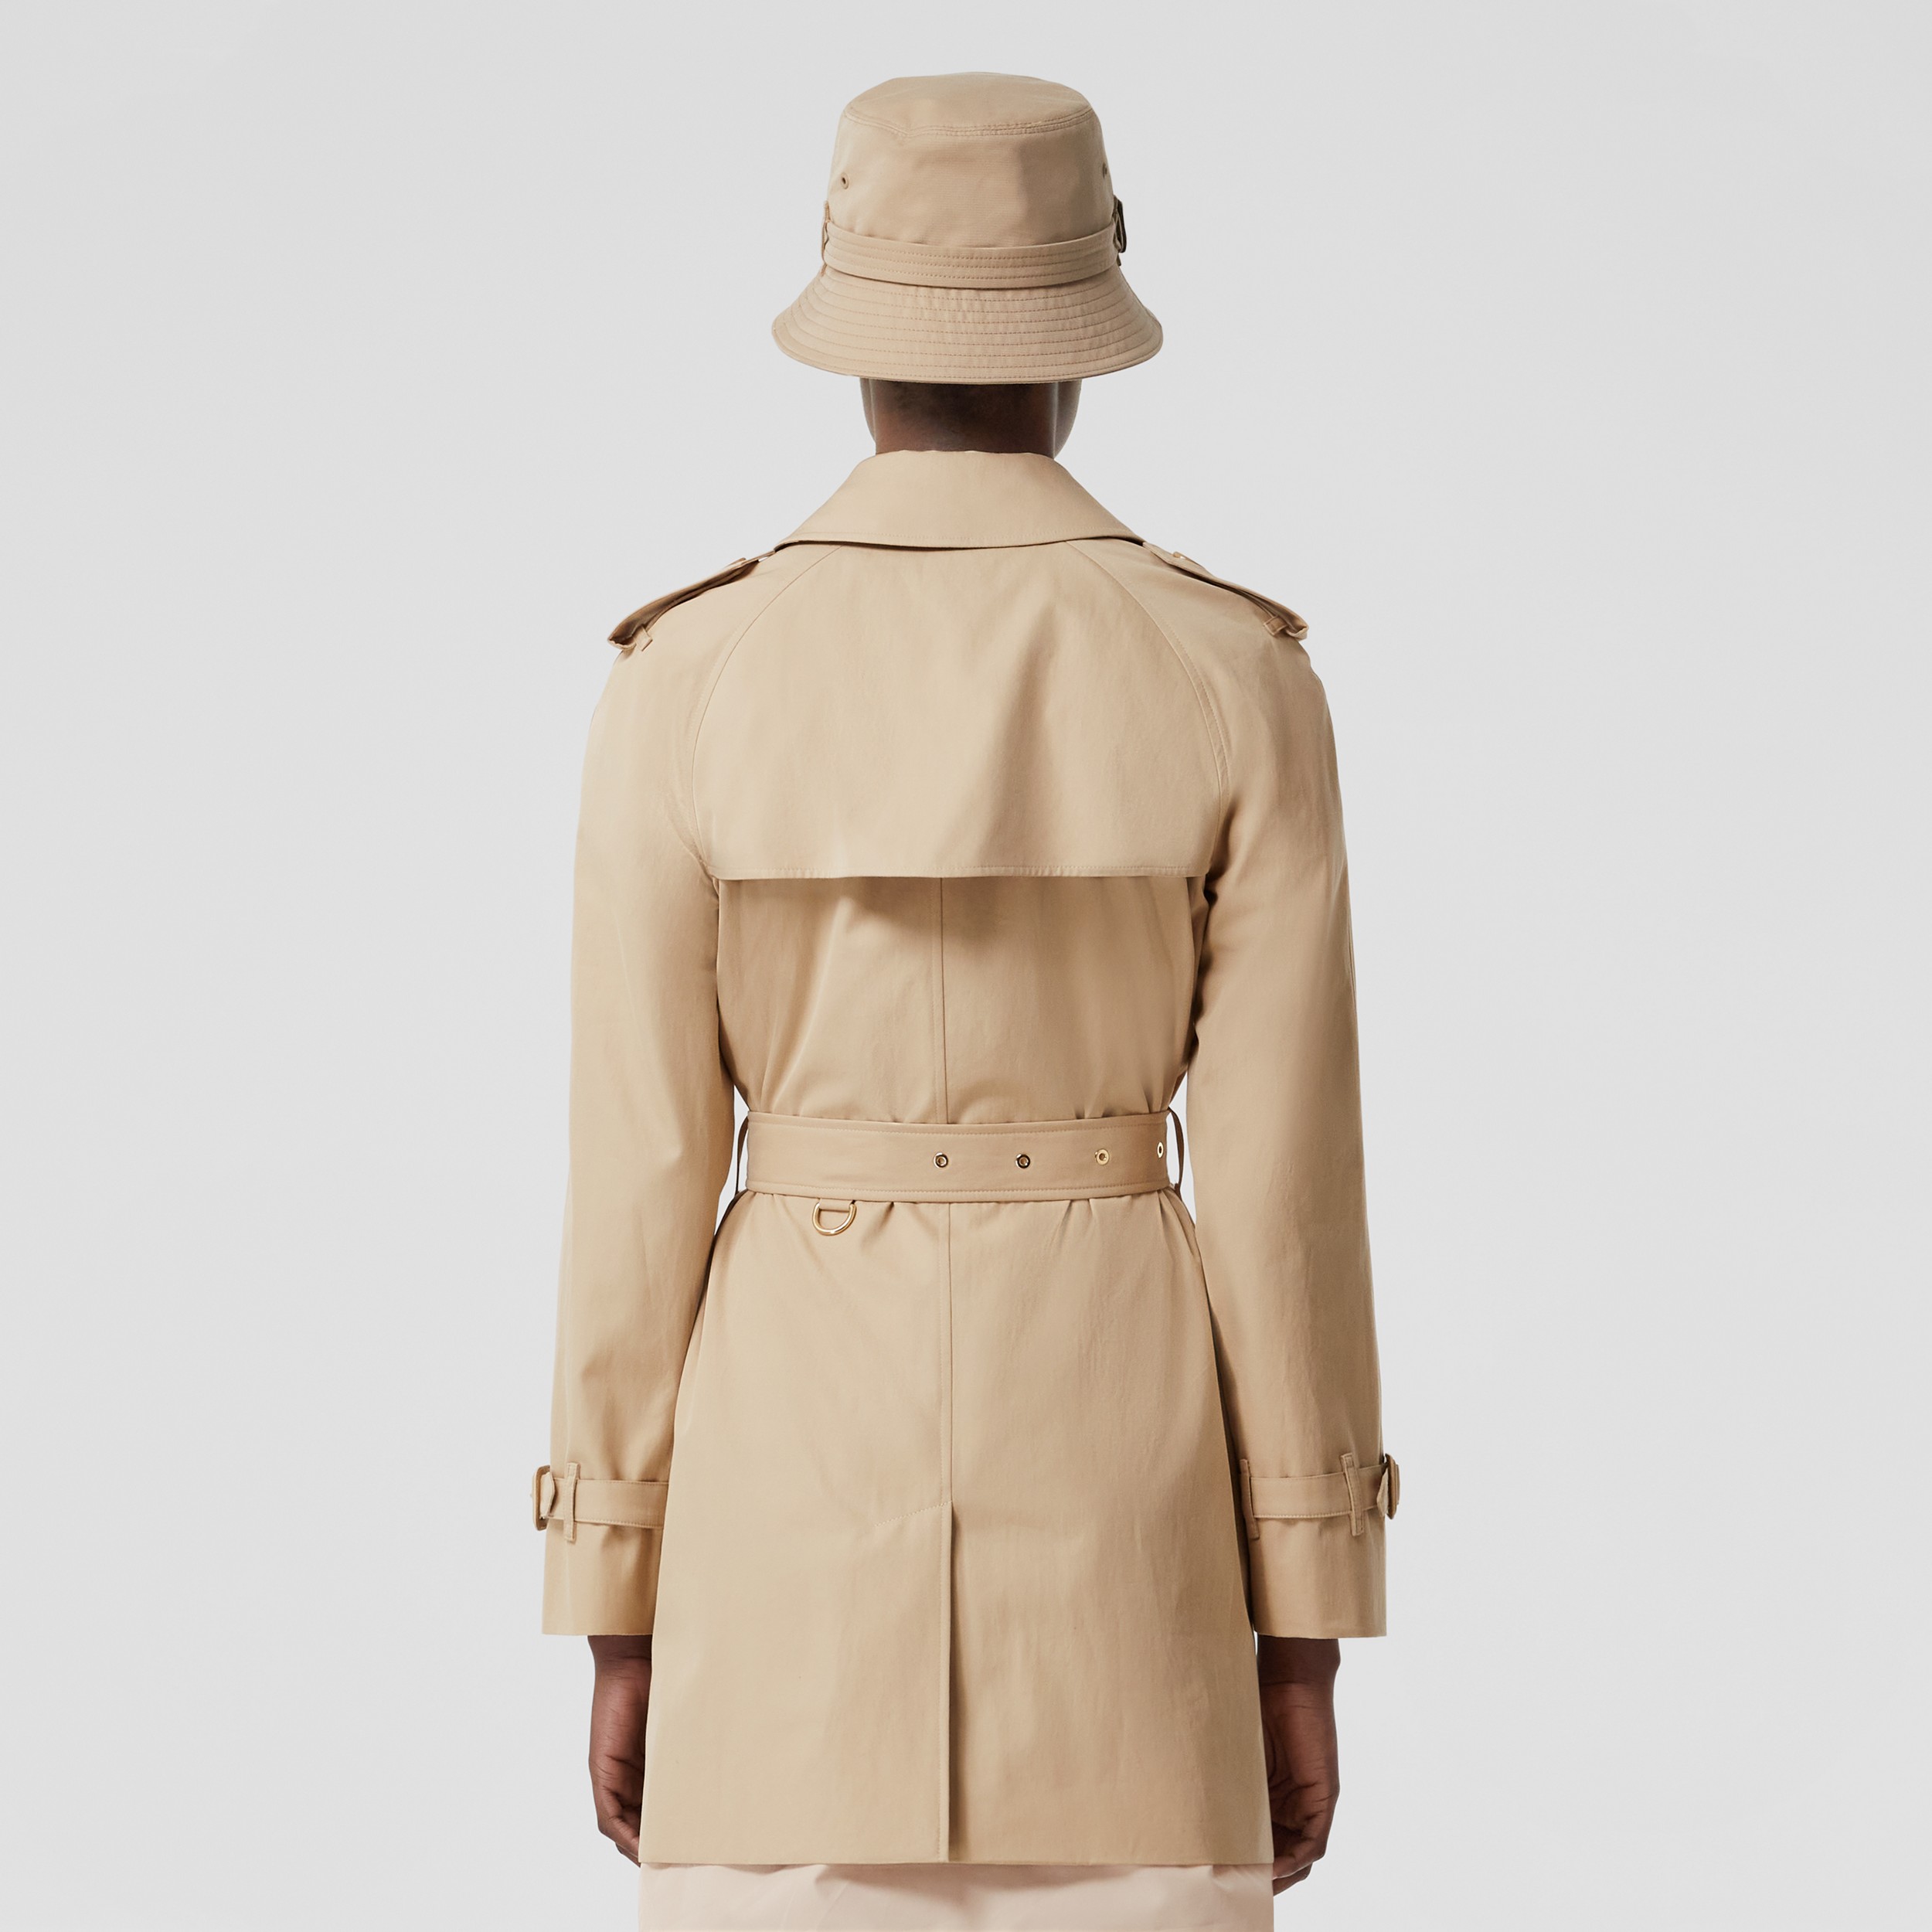 Trench coat Waterloo de gabardine tropical (Fulvo Suave) - Mulheres | Burberry® oficial - 3